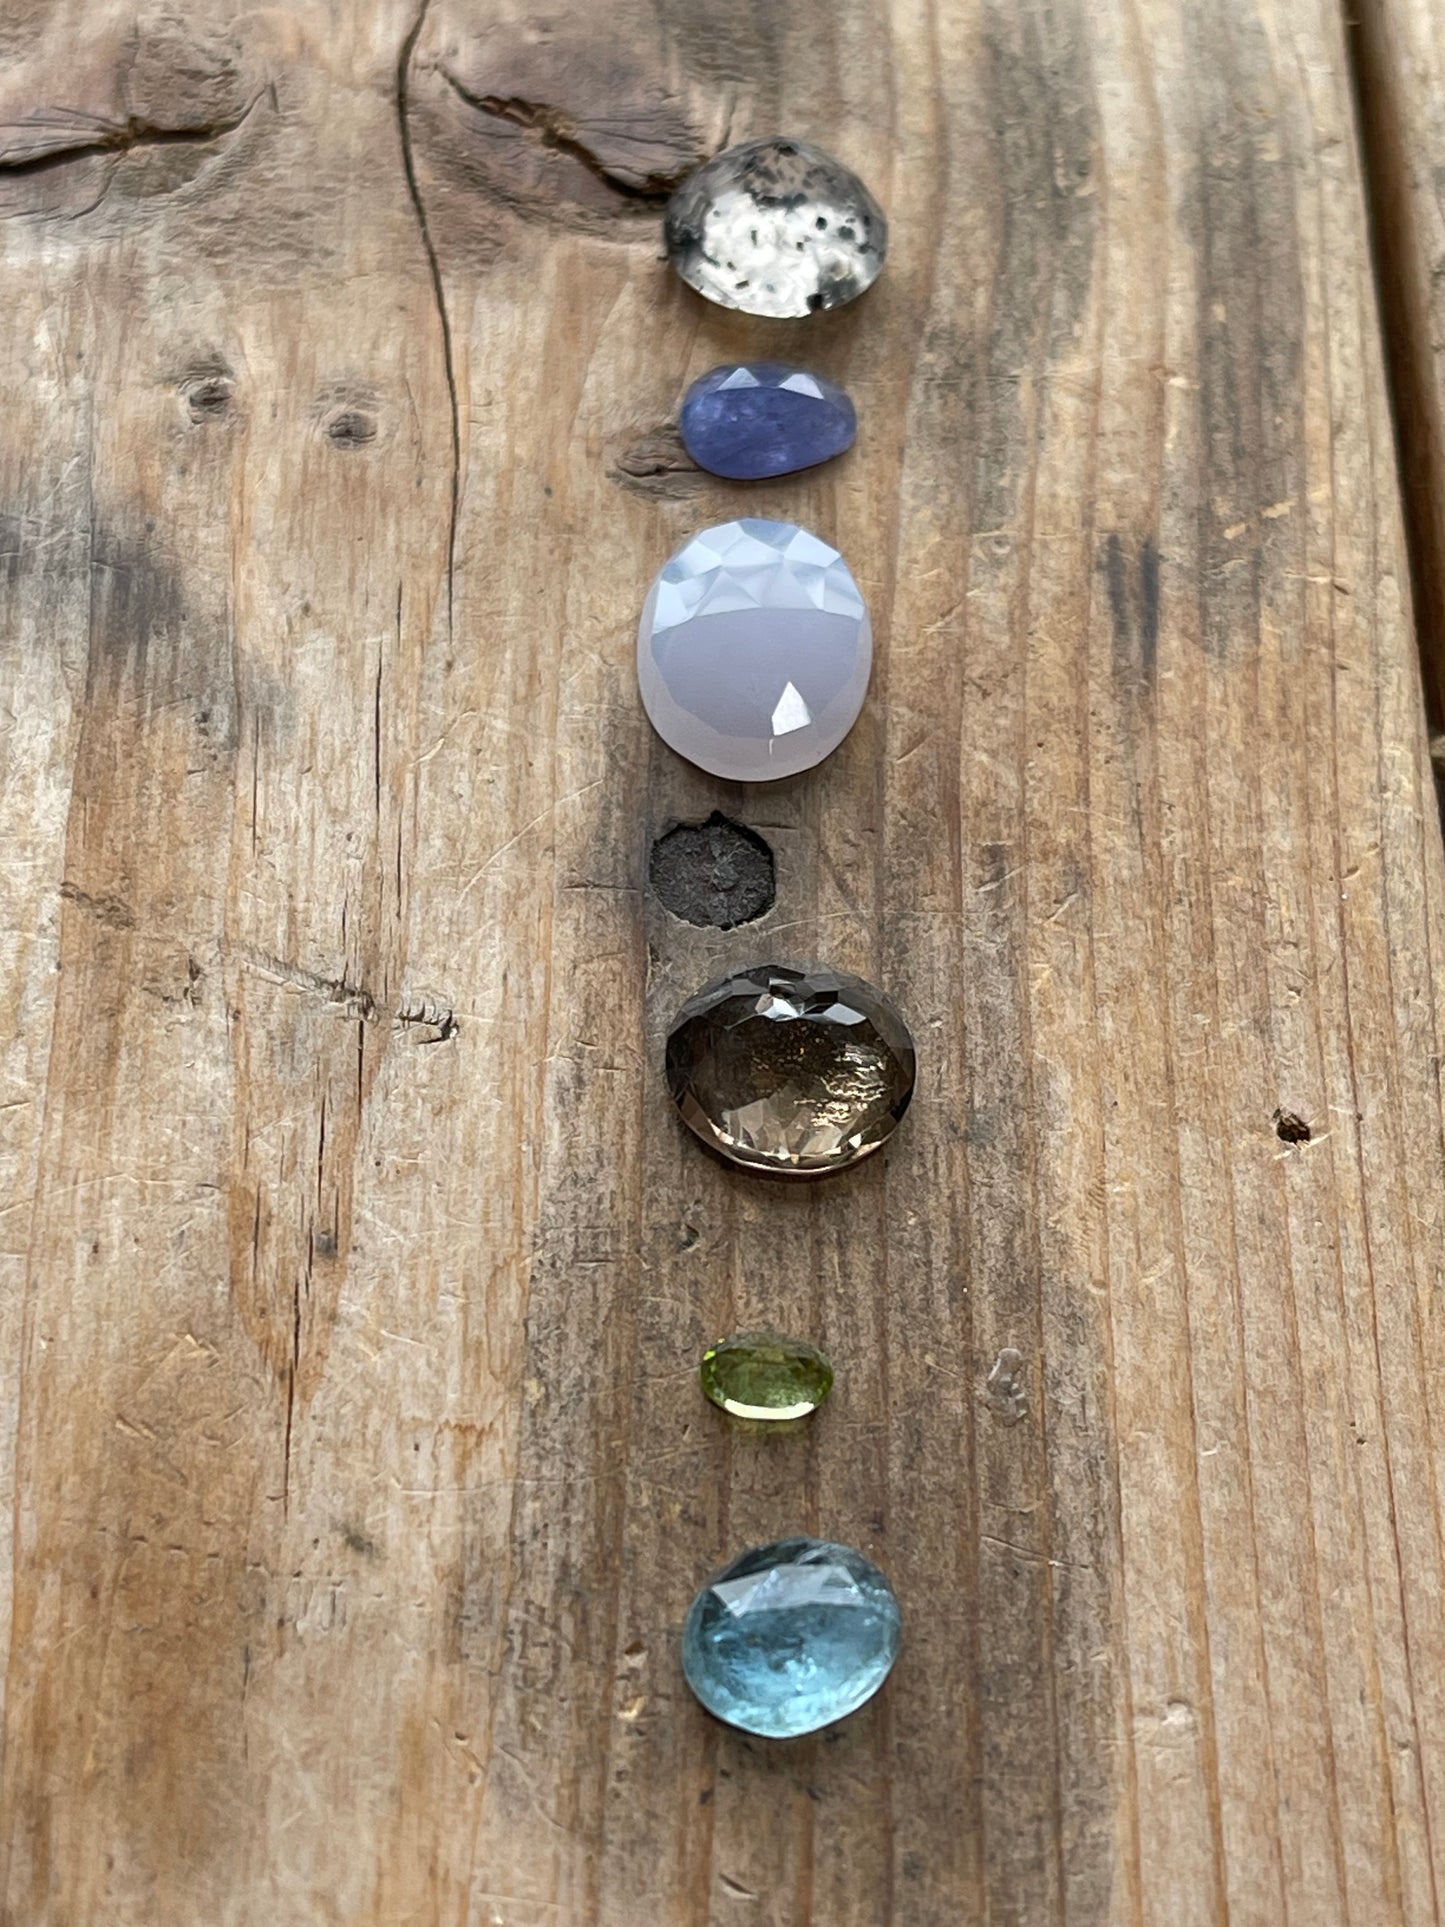 Gemstone Collection 59: Chalcedony, Speckled Agate, Tanzanite, Aquamarine, Peridot, Cloudy Quartz - 23CT